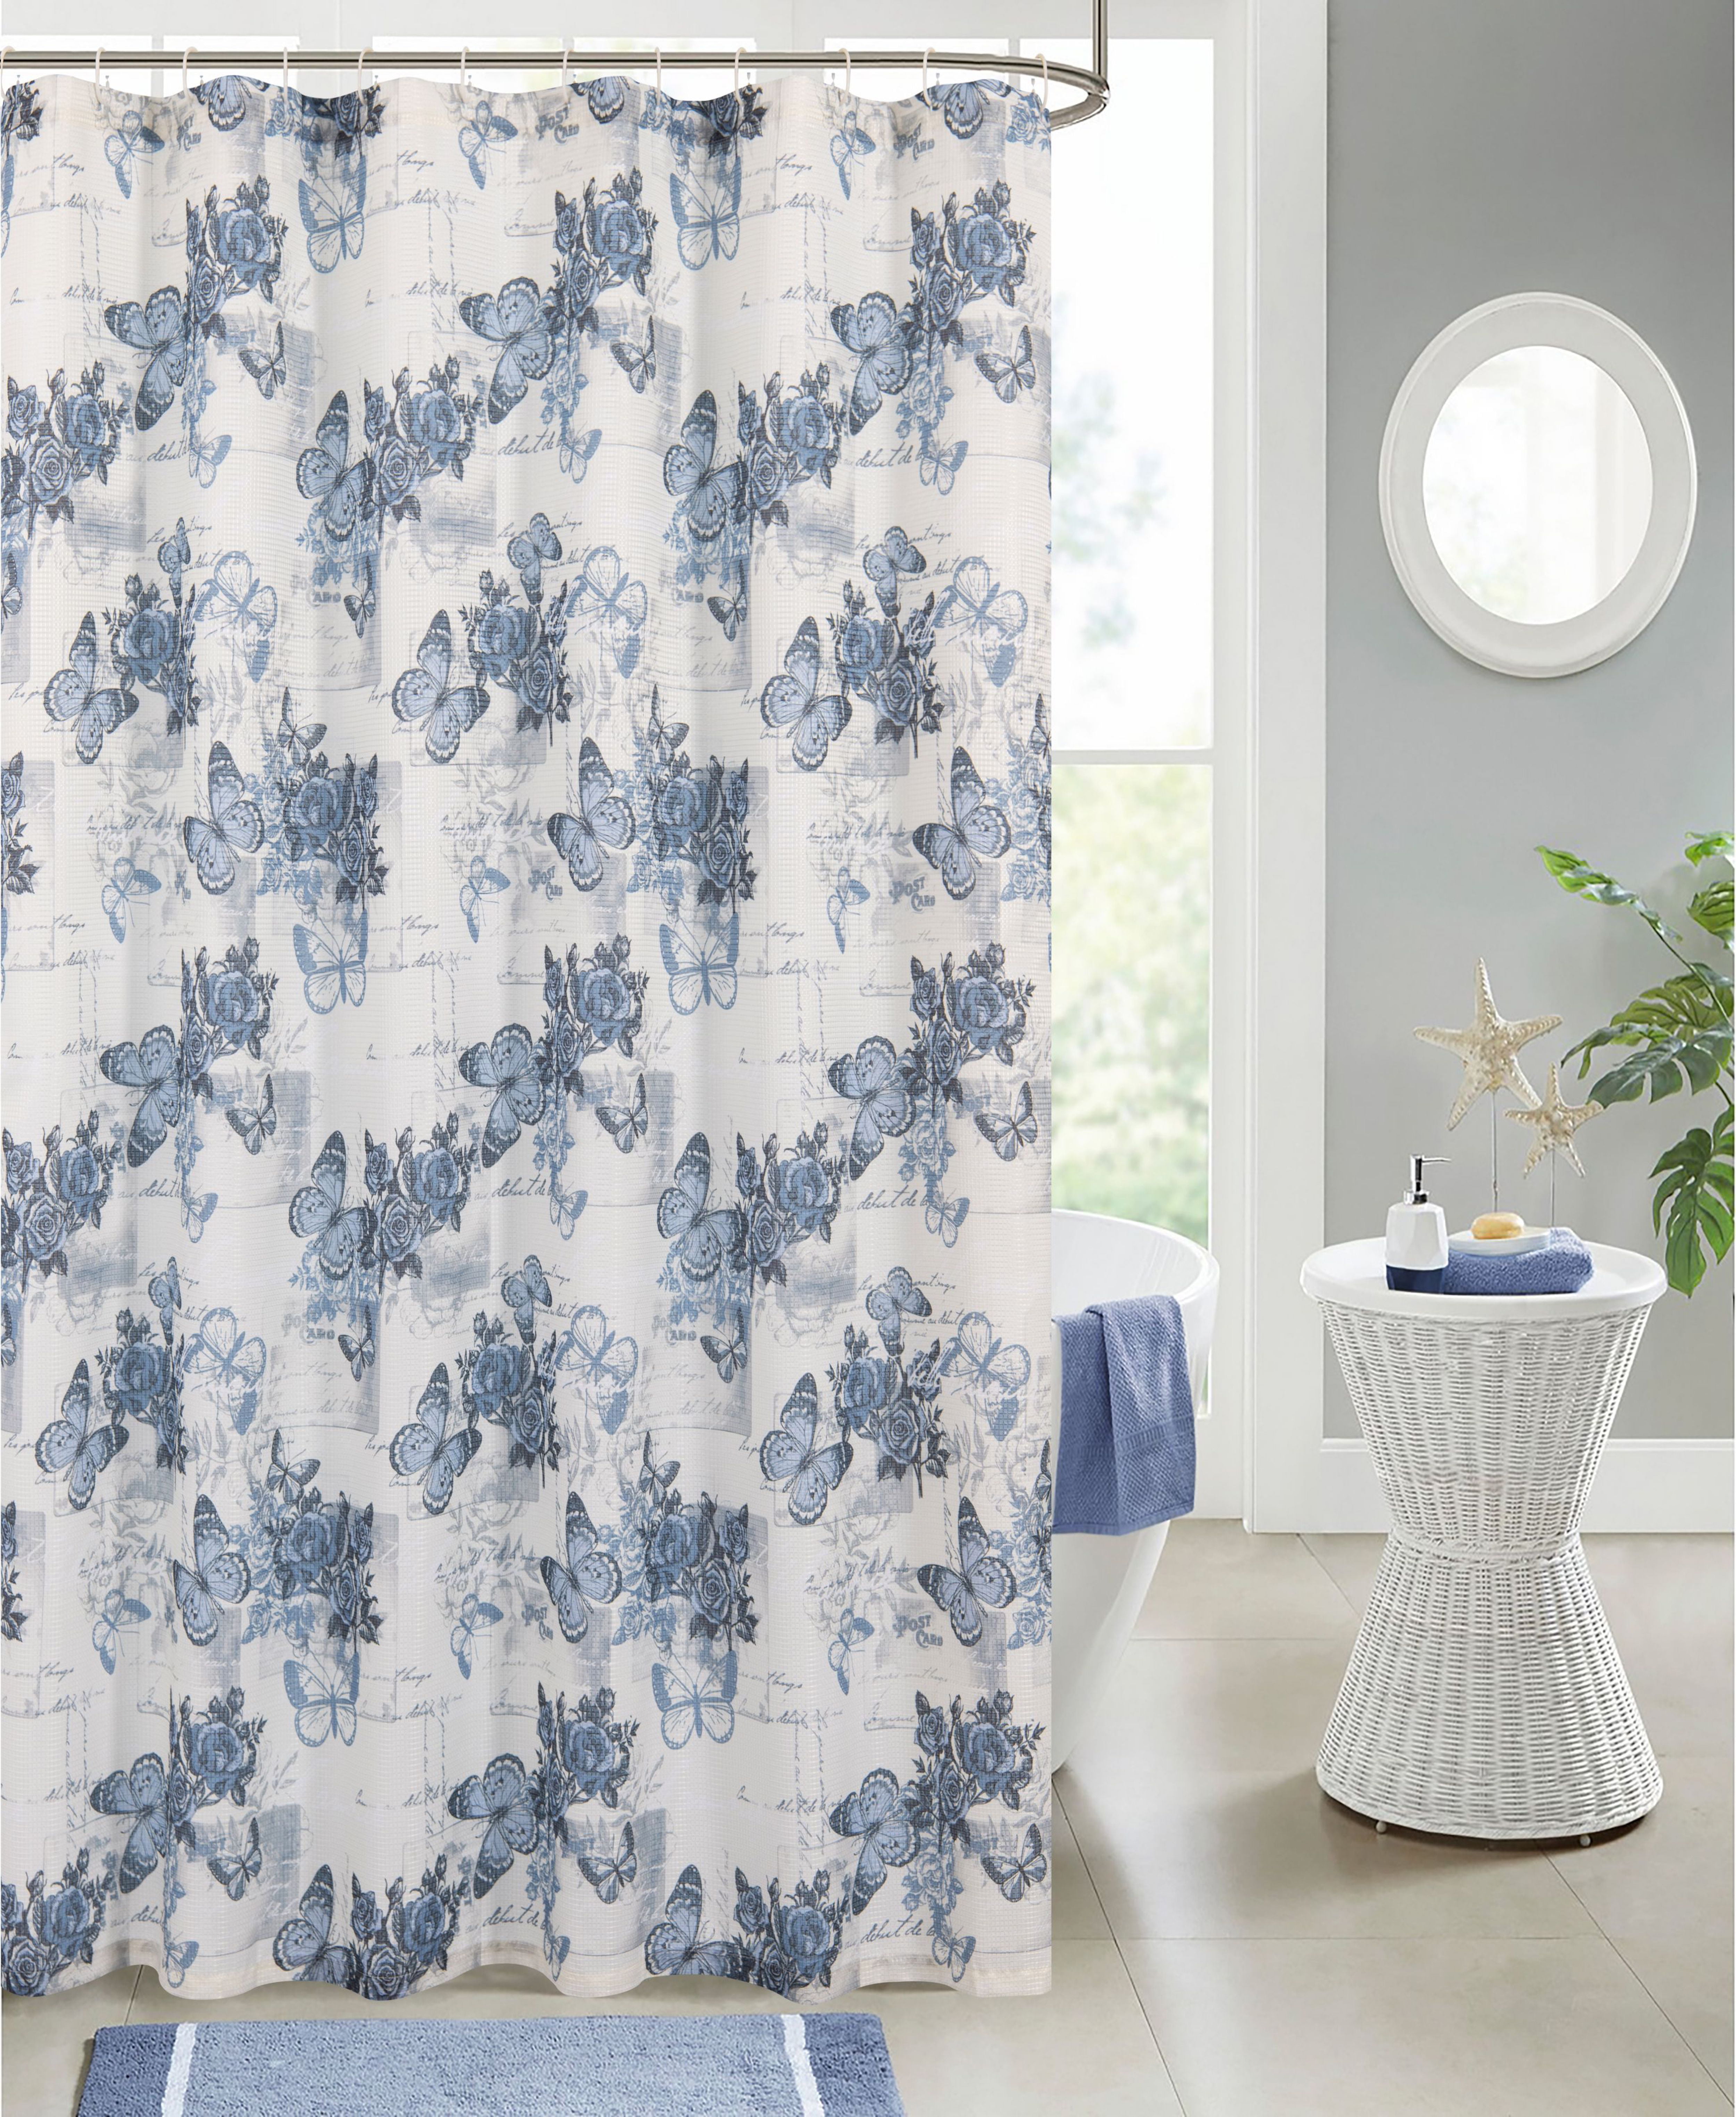 Dream Flower Butterfly Shower Curtain Liner Waterproof Fabric Bathroom Mat Hooks 